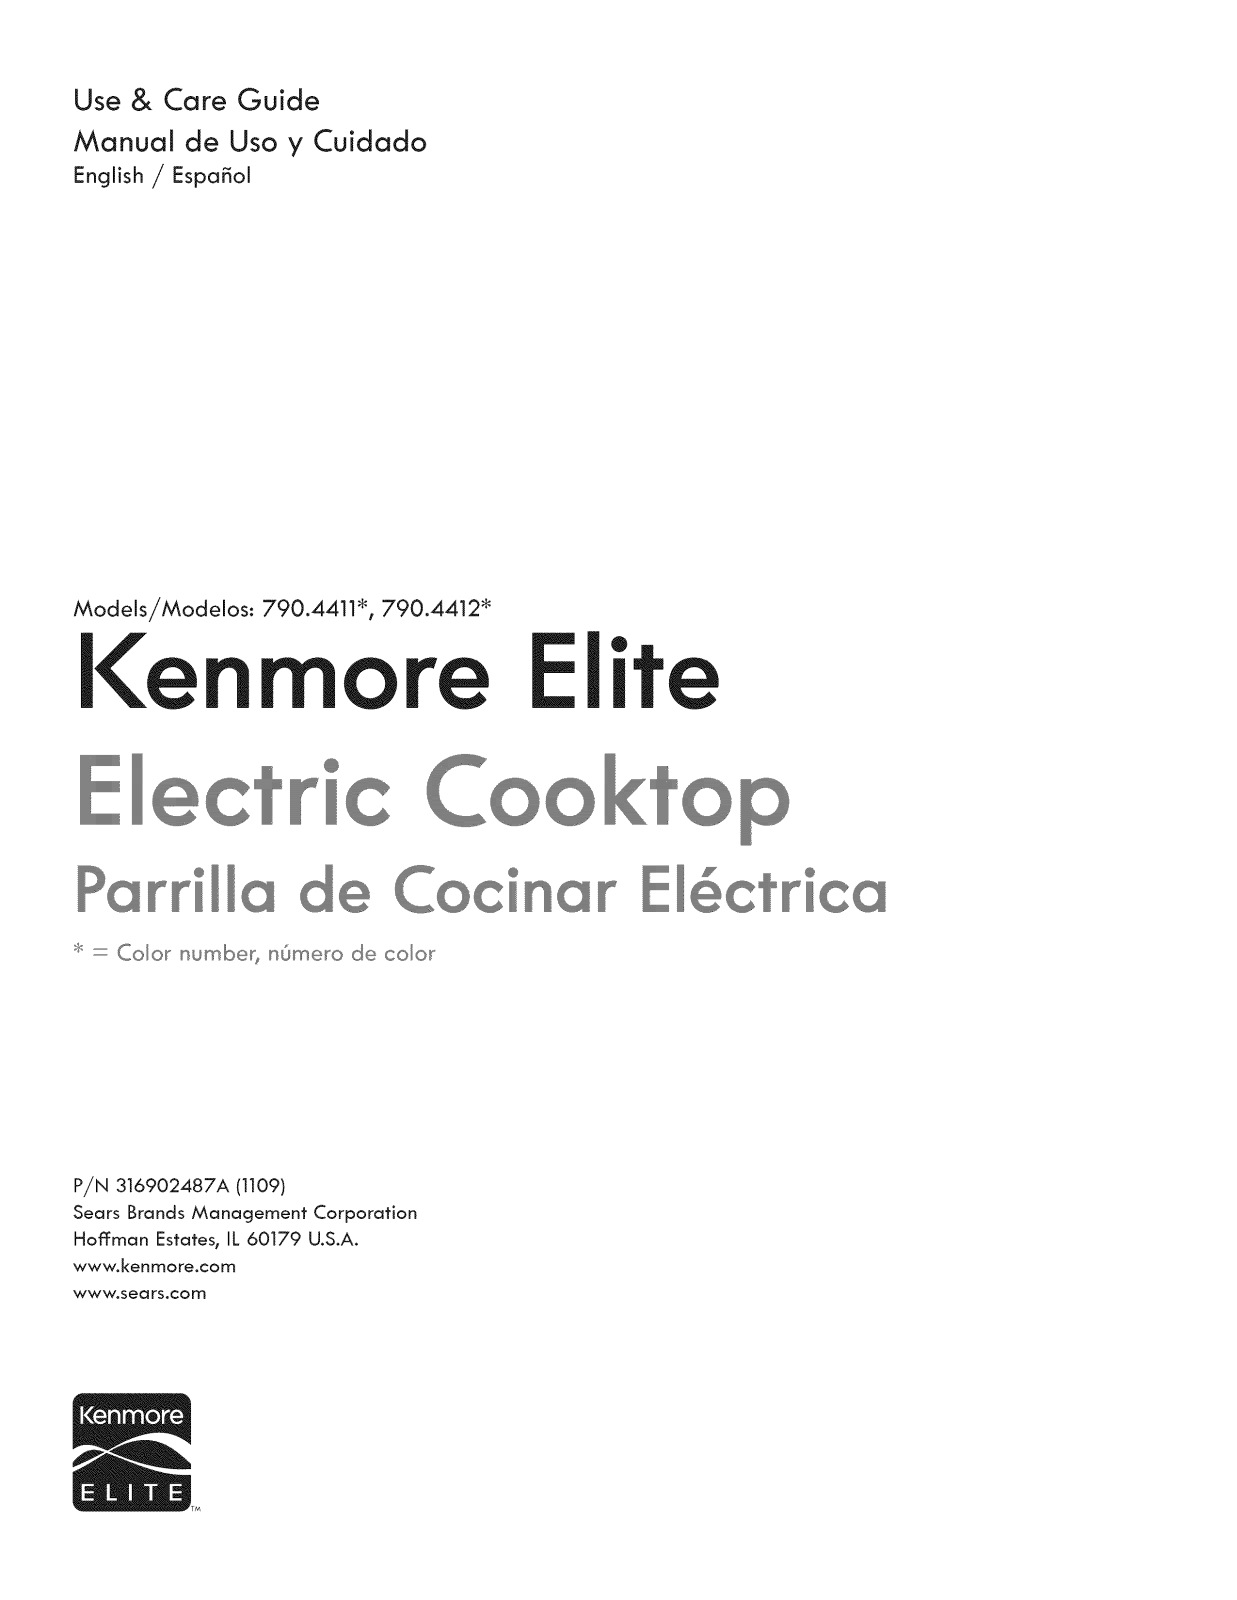 Kenmore Elite 790.4412, Elite 790.4411 User Manual